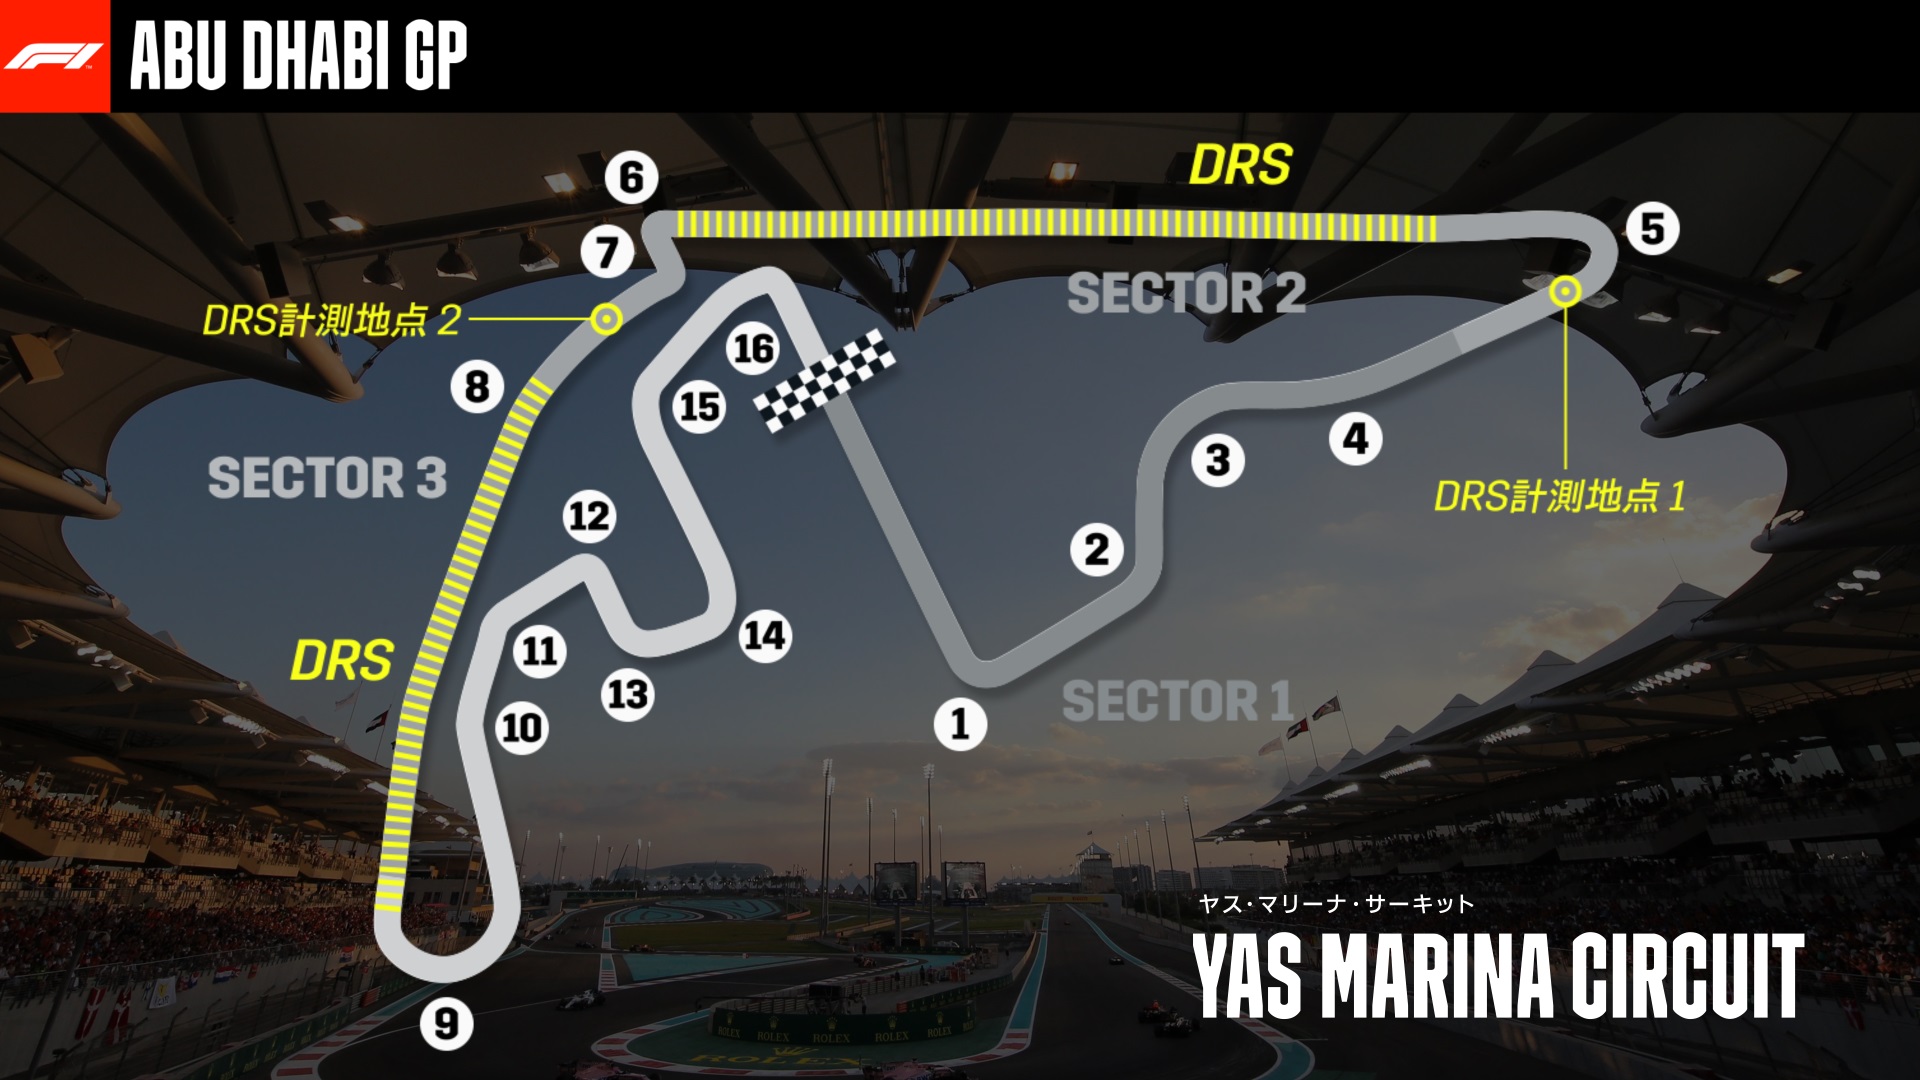 2021-10-27 Abu Dhabi Yas Marina Circuit, Abu Dhabi Circuit F1 Formula 1